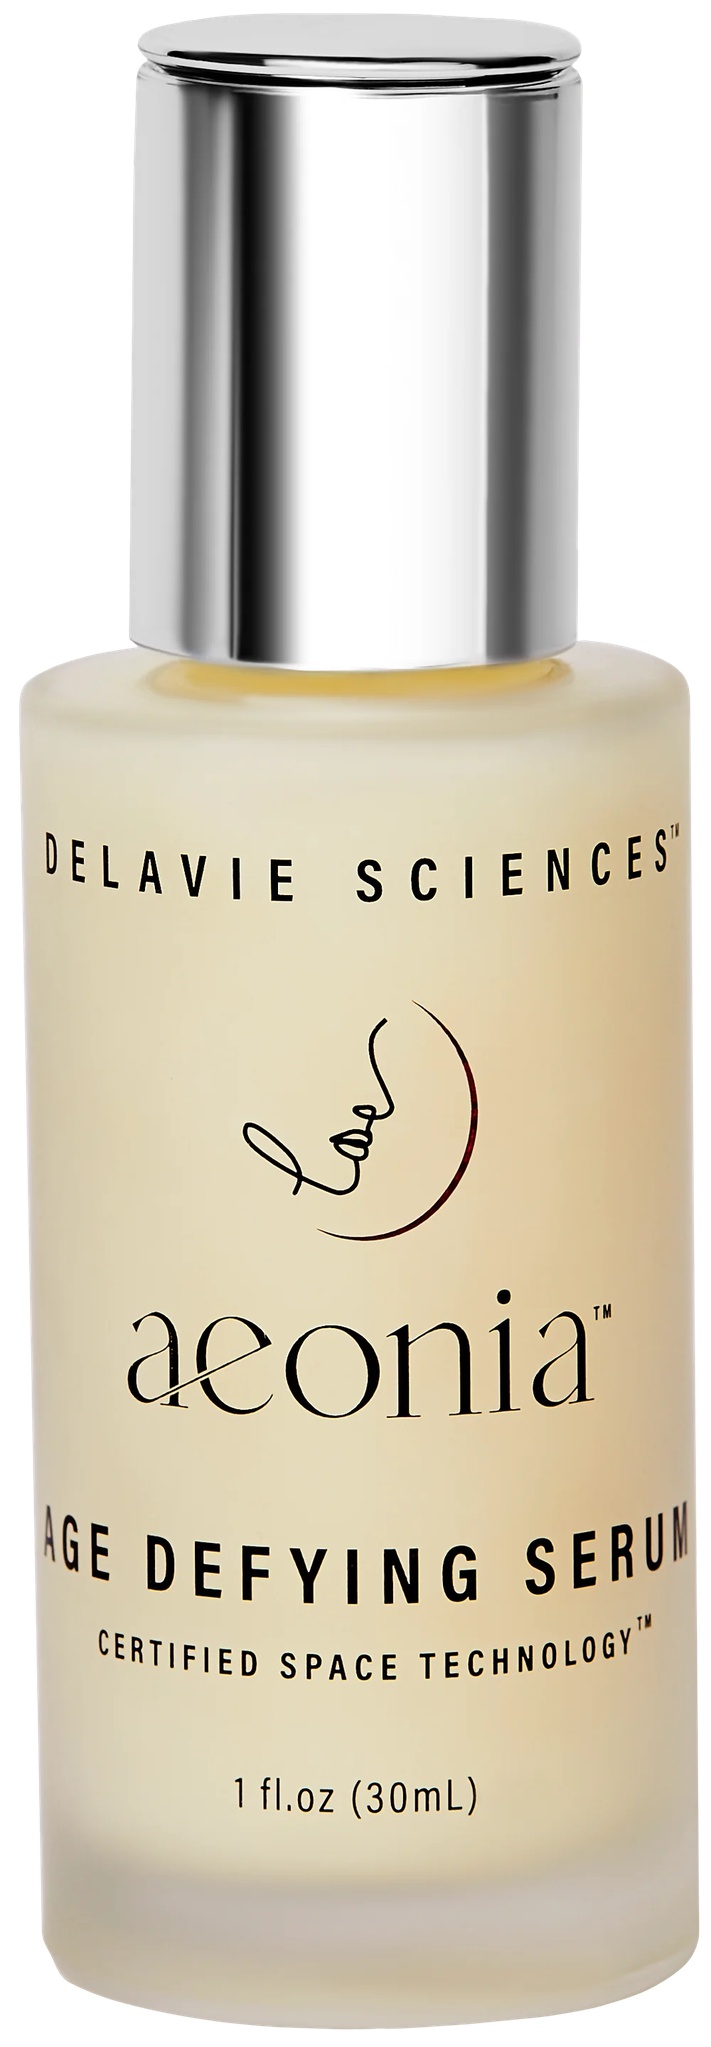 Delavie Sciences Aeonia Age Defying Serum